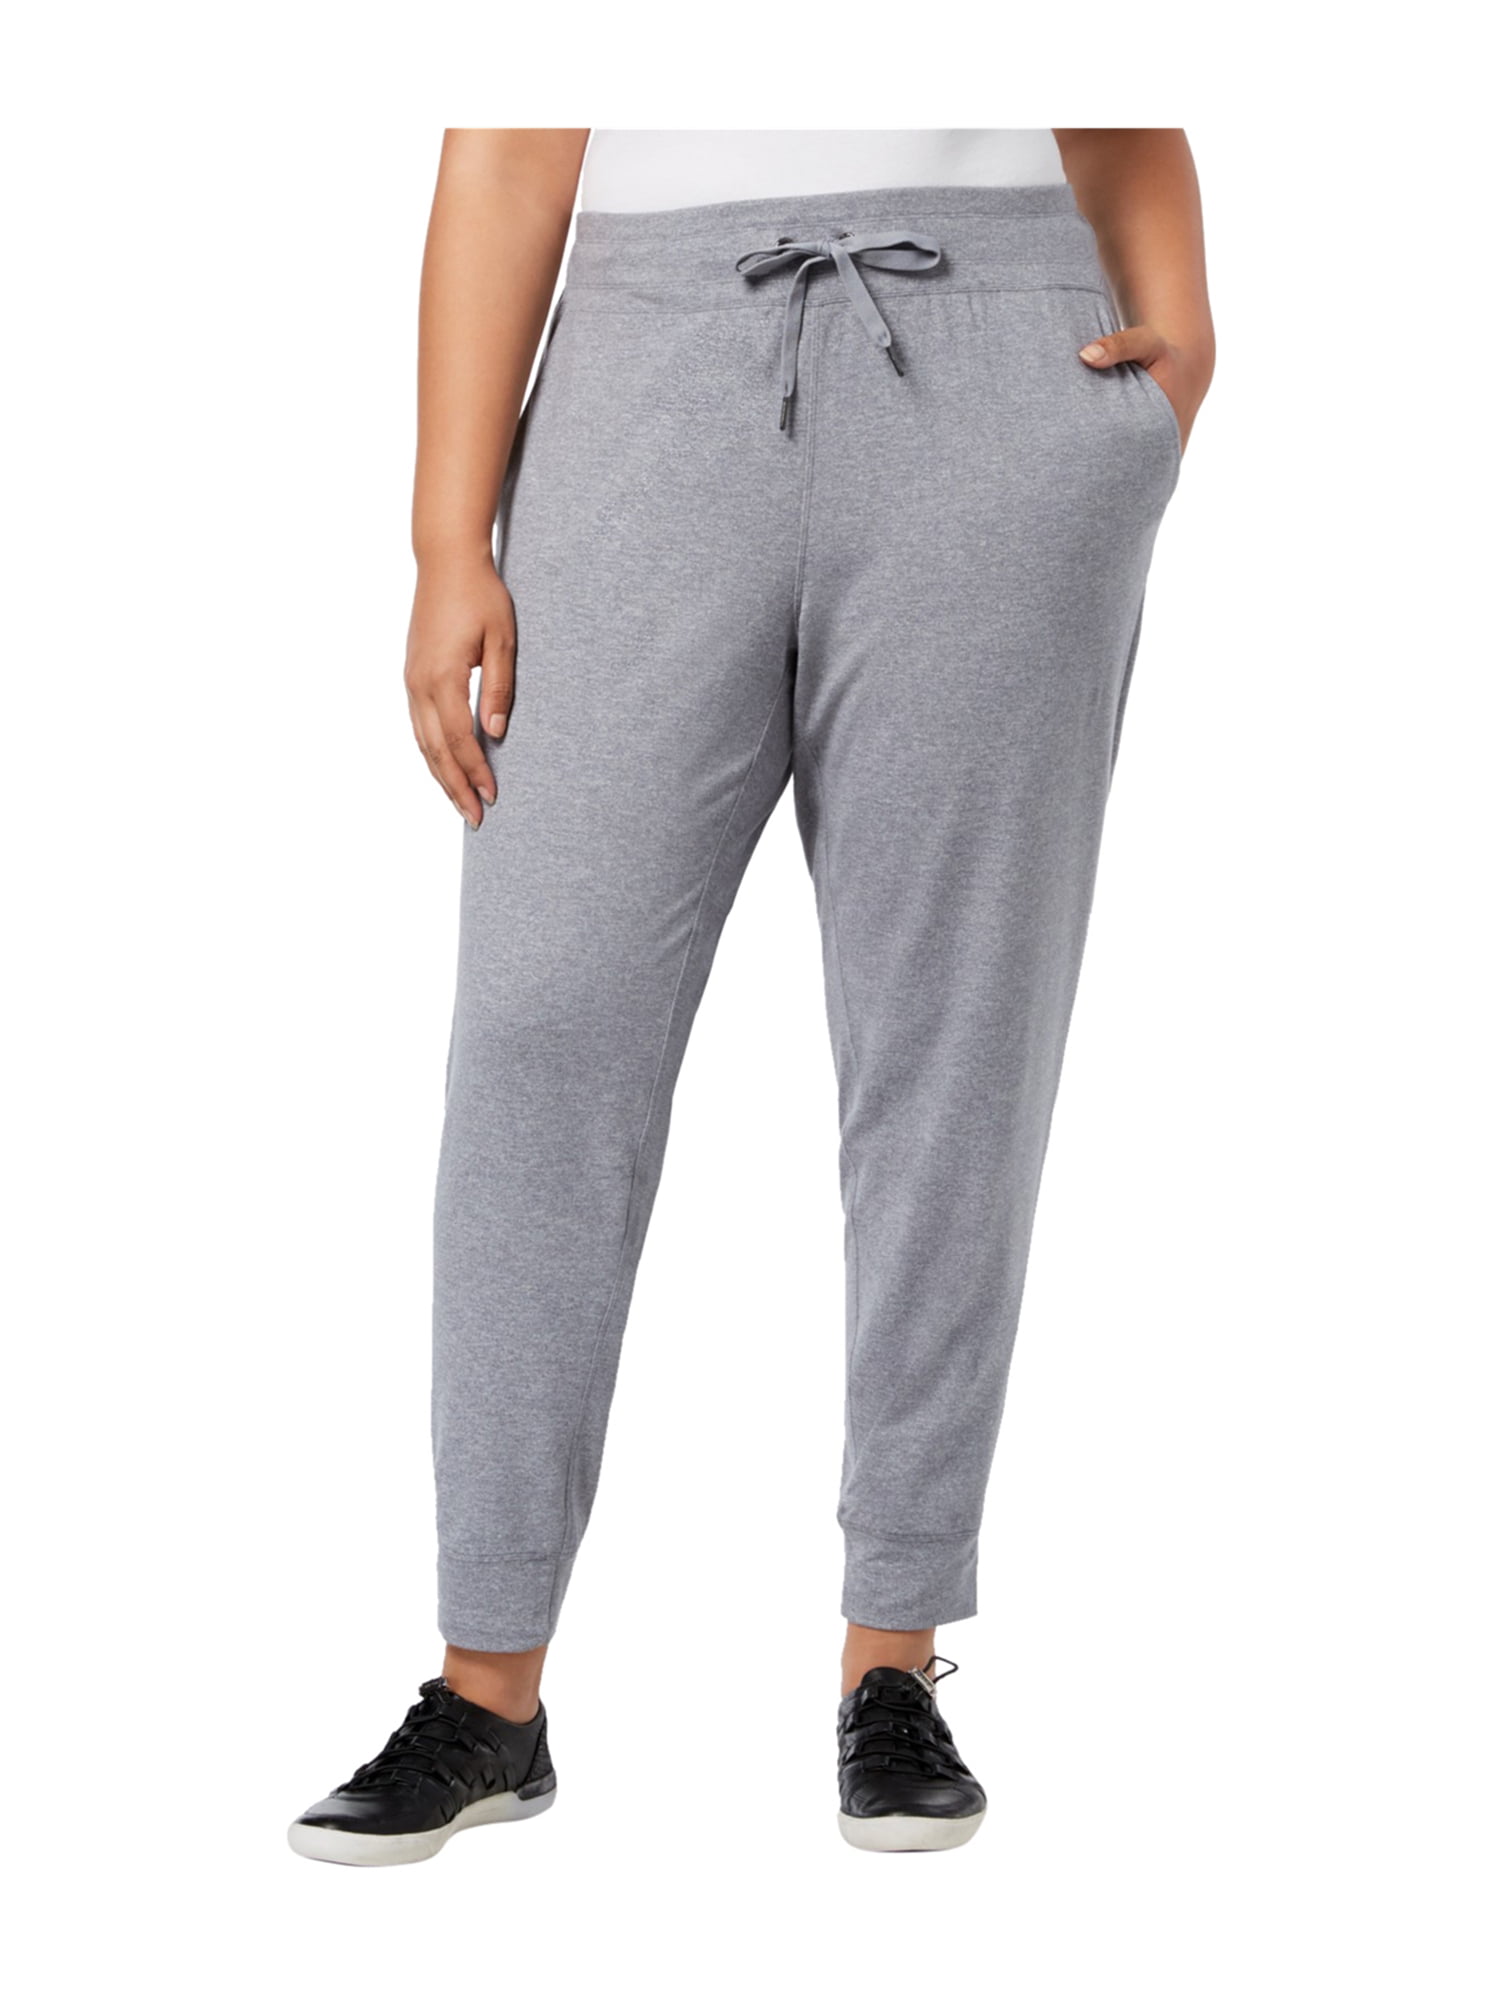 Calvin Klein Womens High Waist Athletic Jogger Pants grey 1X/28 - Plus ...